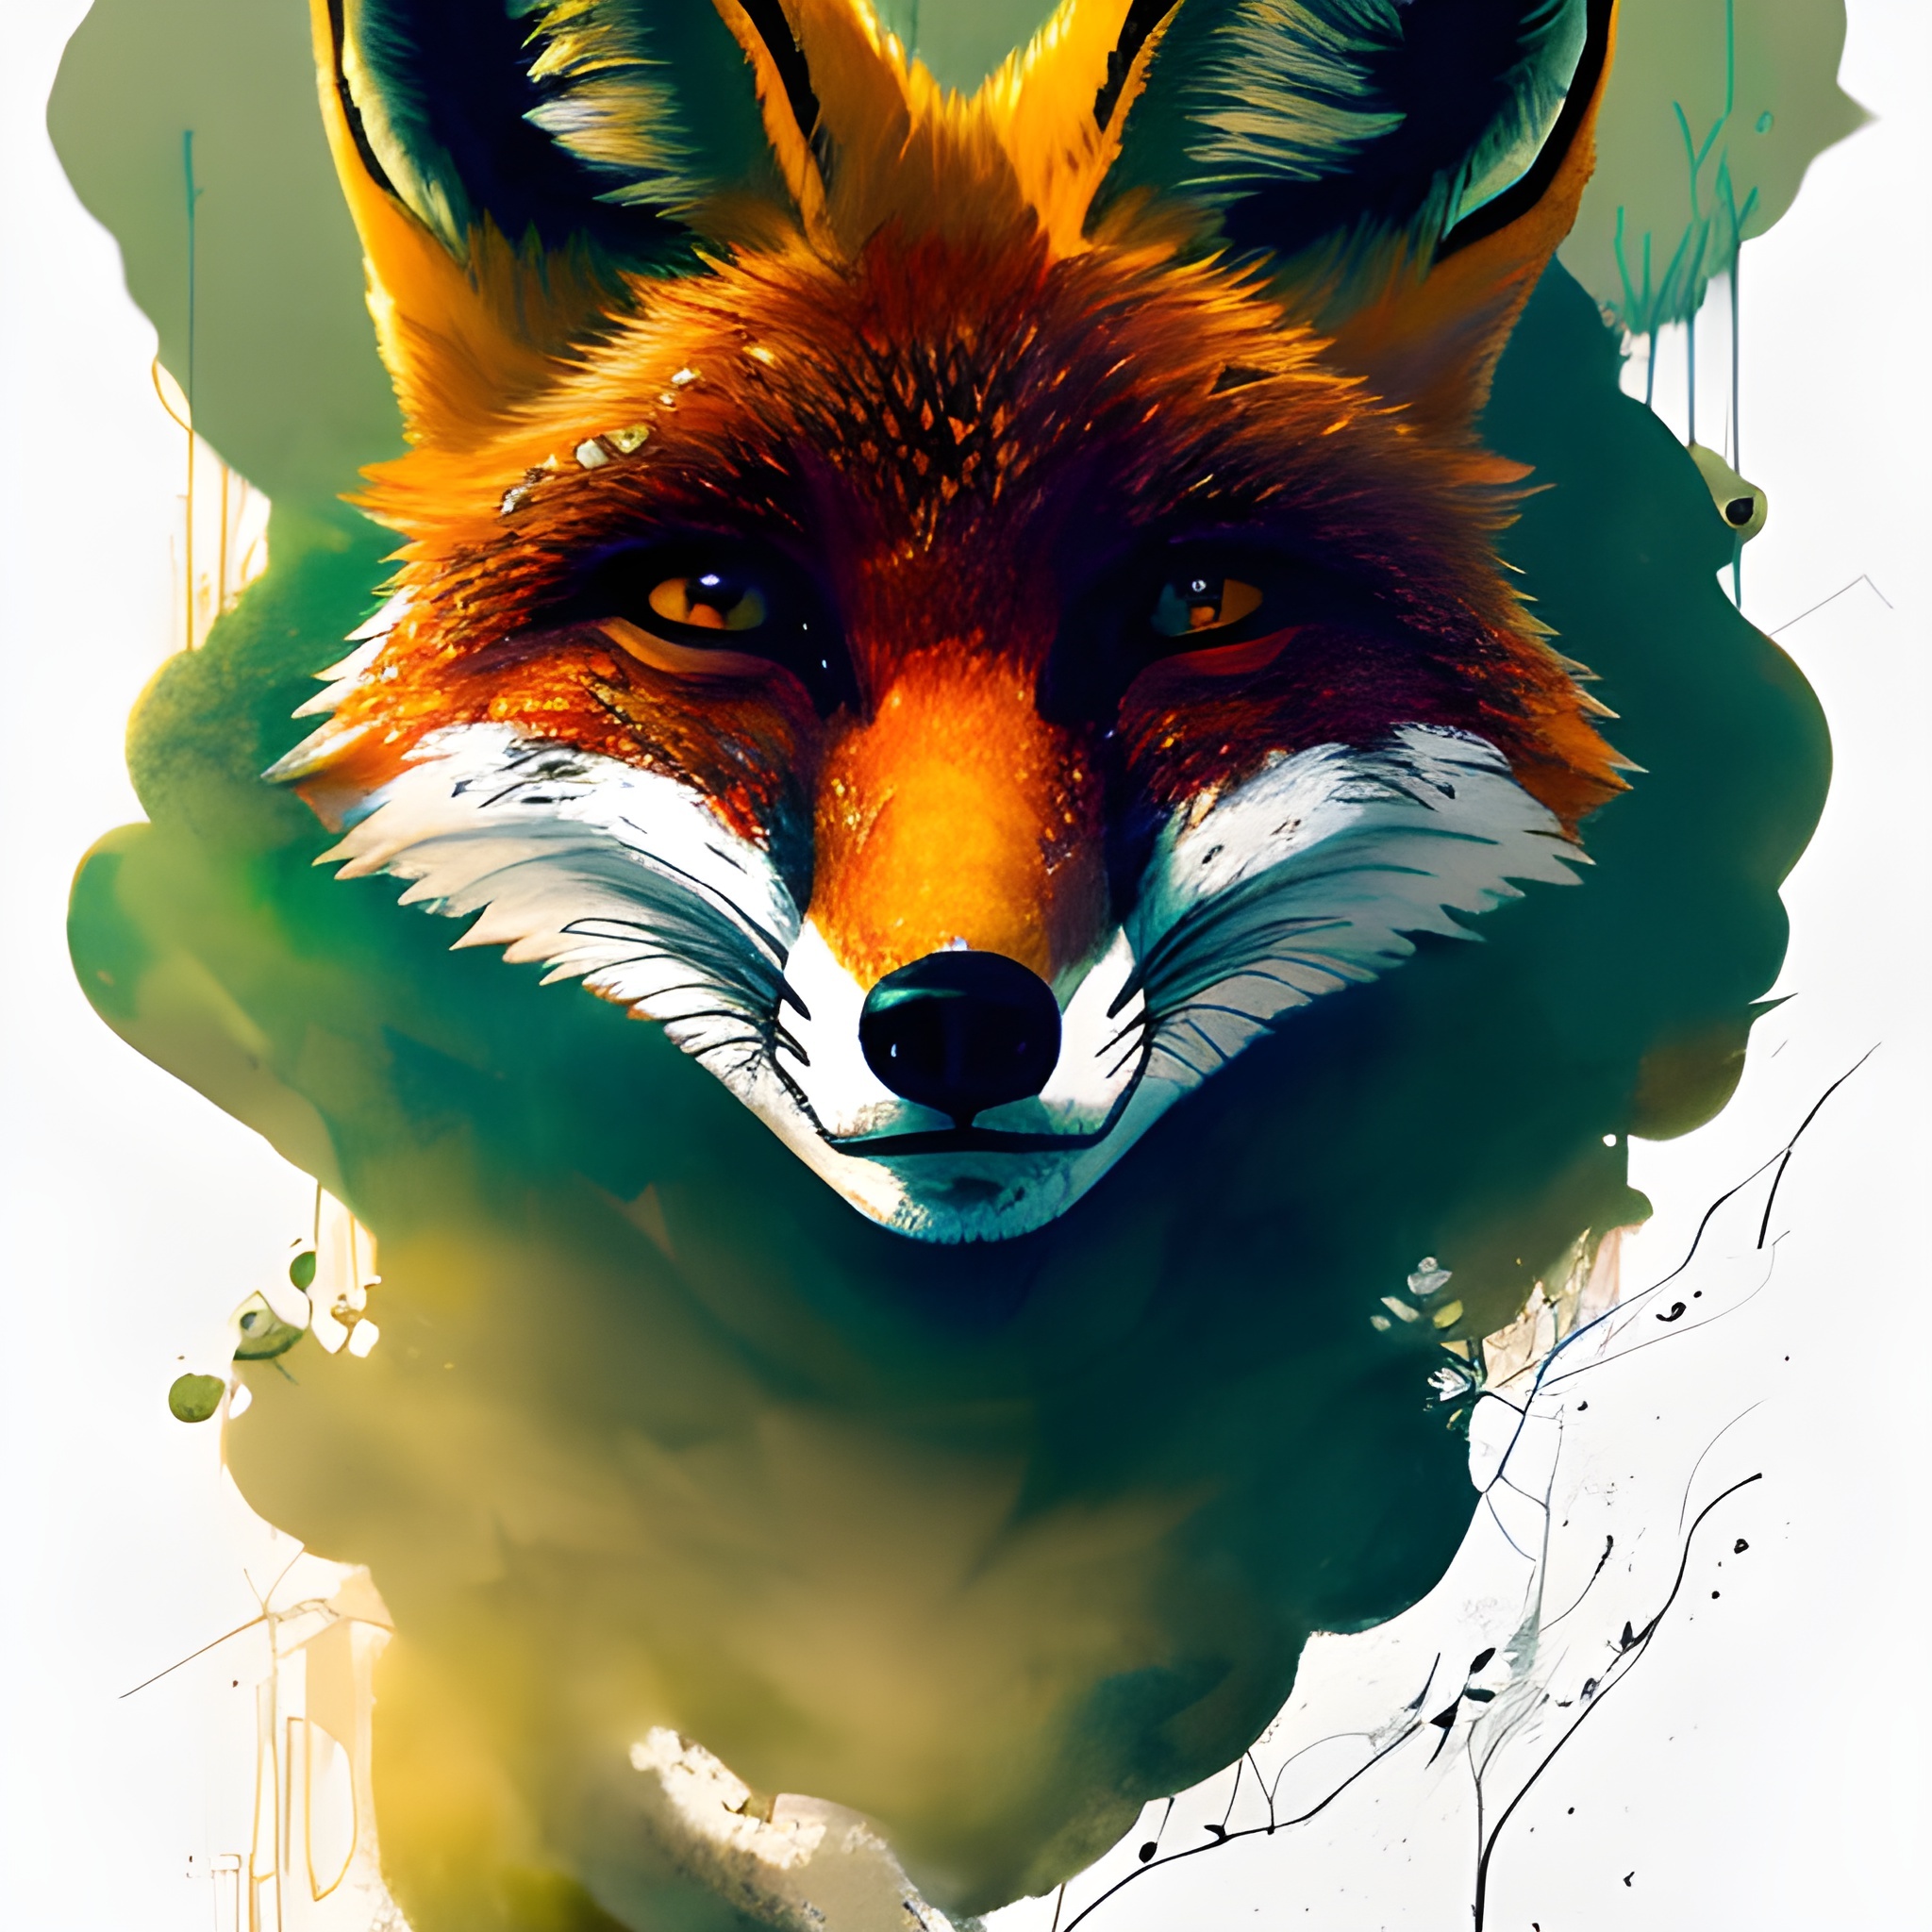 Most fox